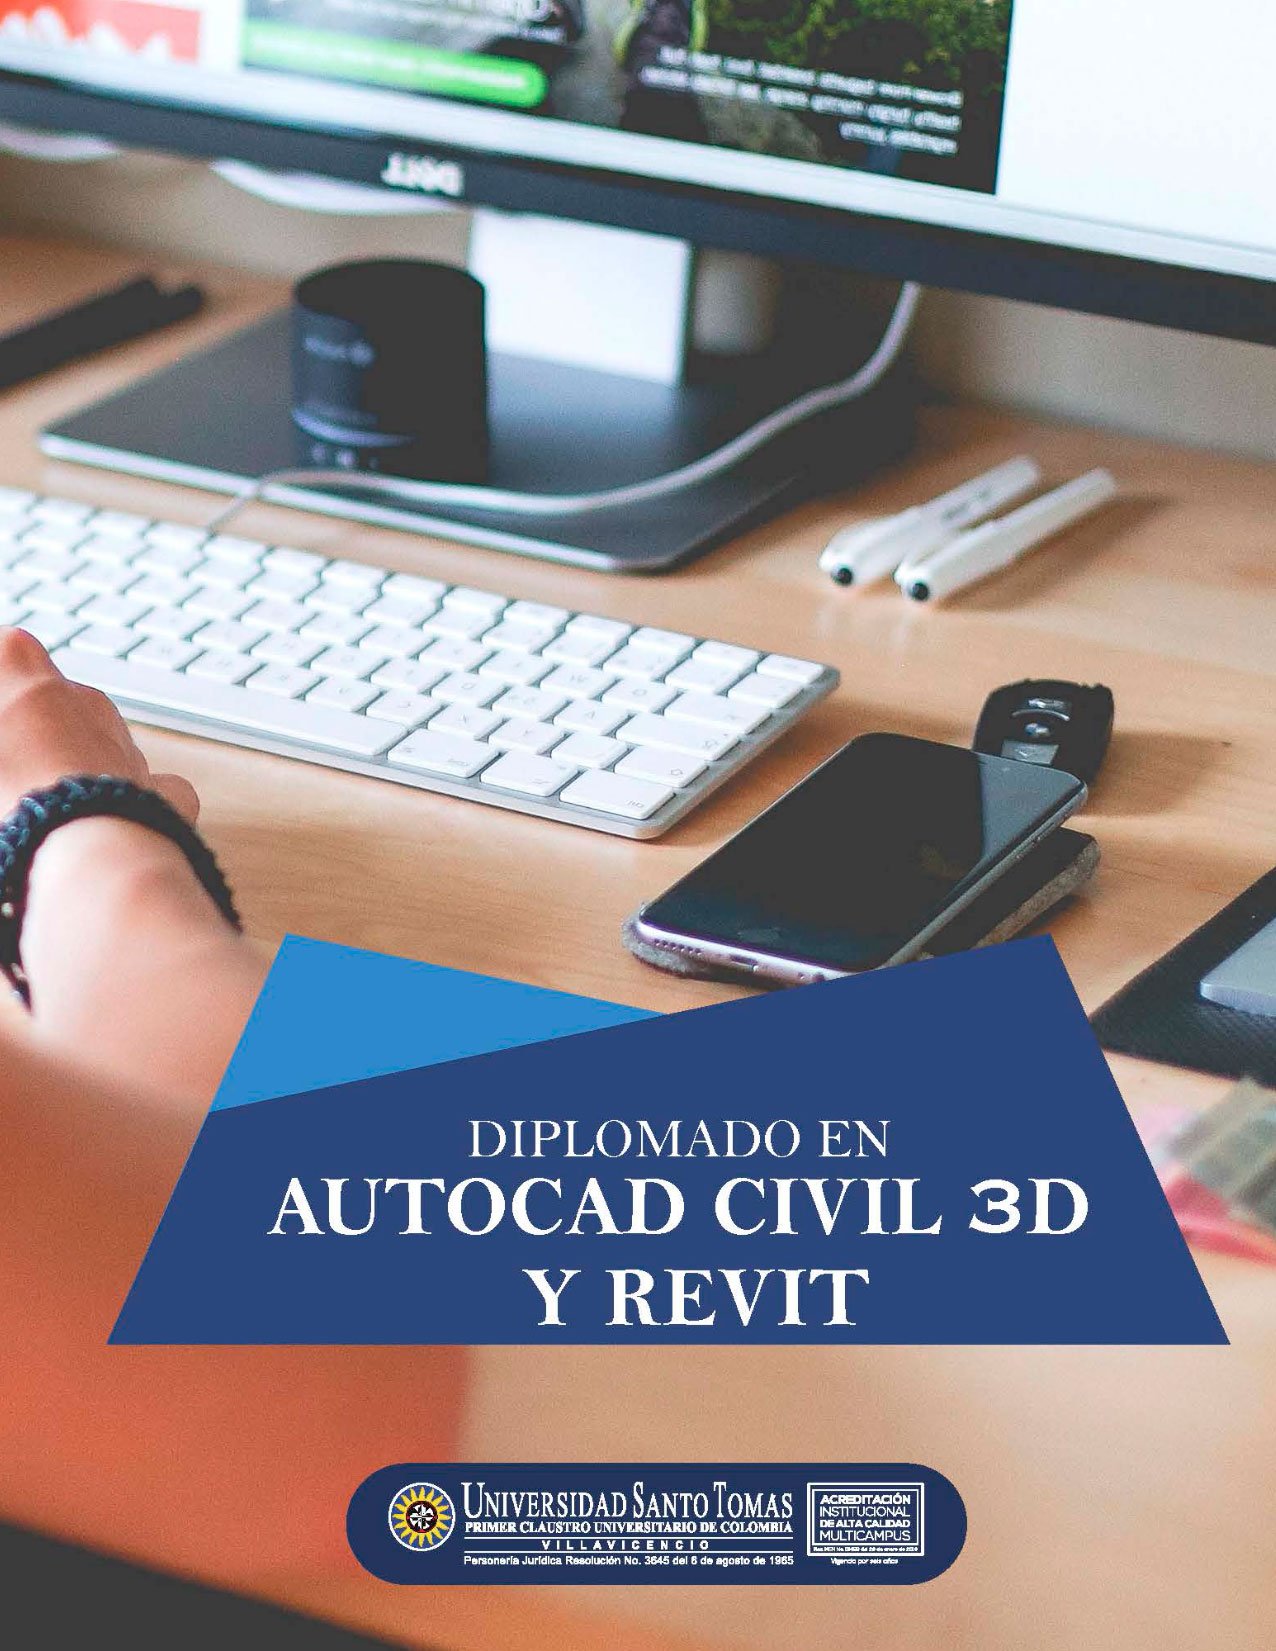 Diplomado en AutoCad Civil 3D y Revit